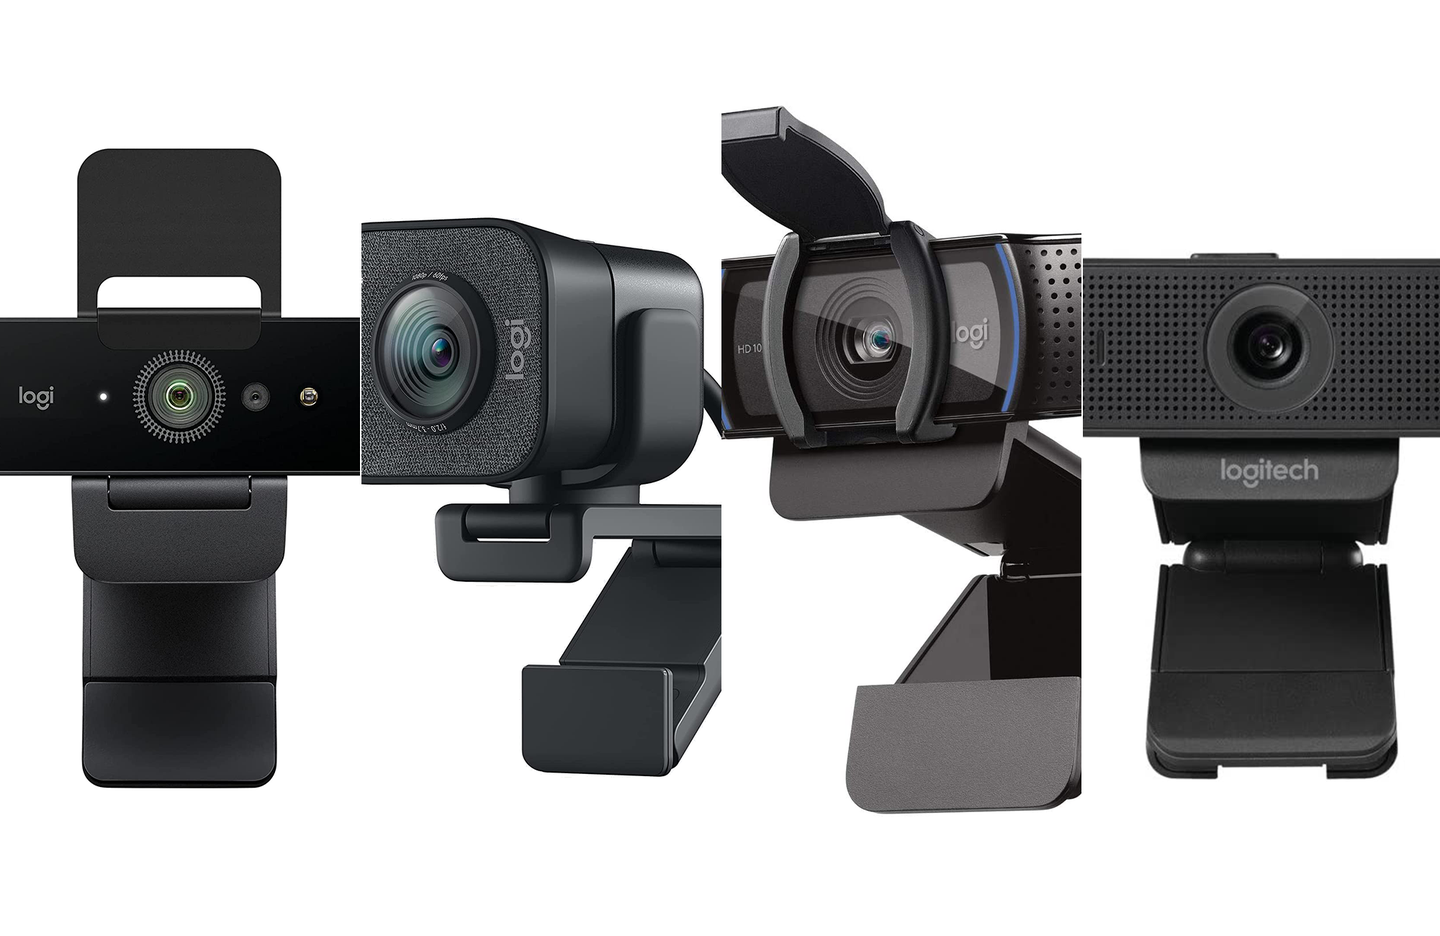 Review: Logitech C270 HD Webcam Provides a Clear Picture for